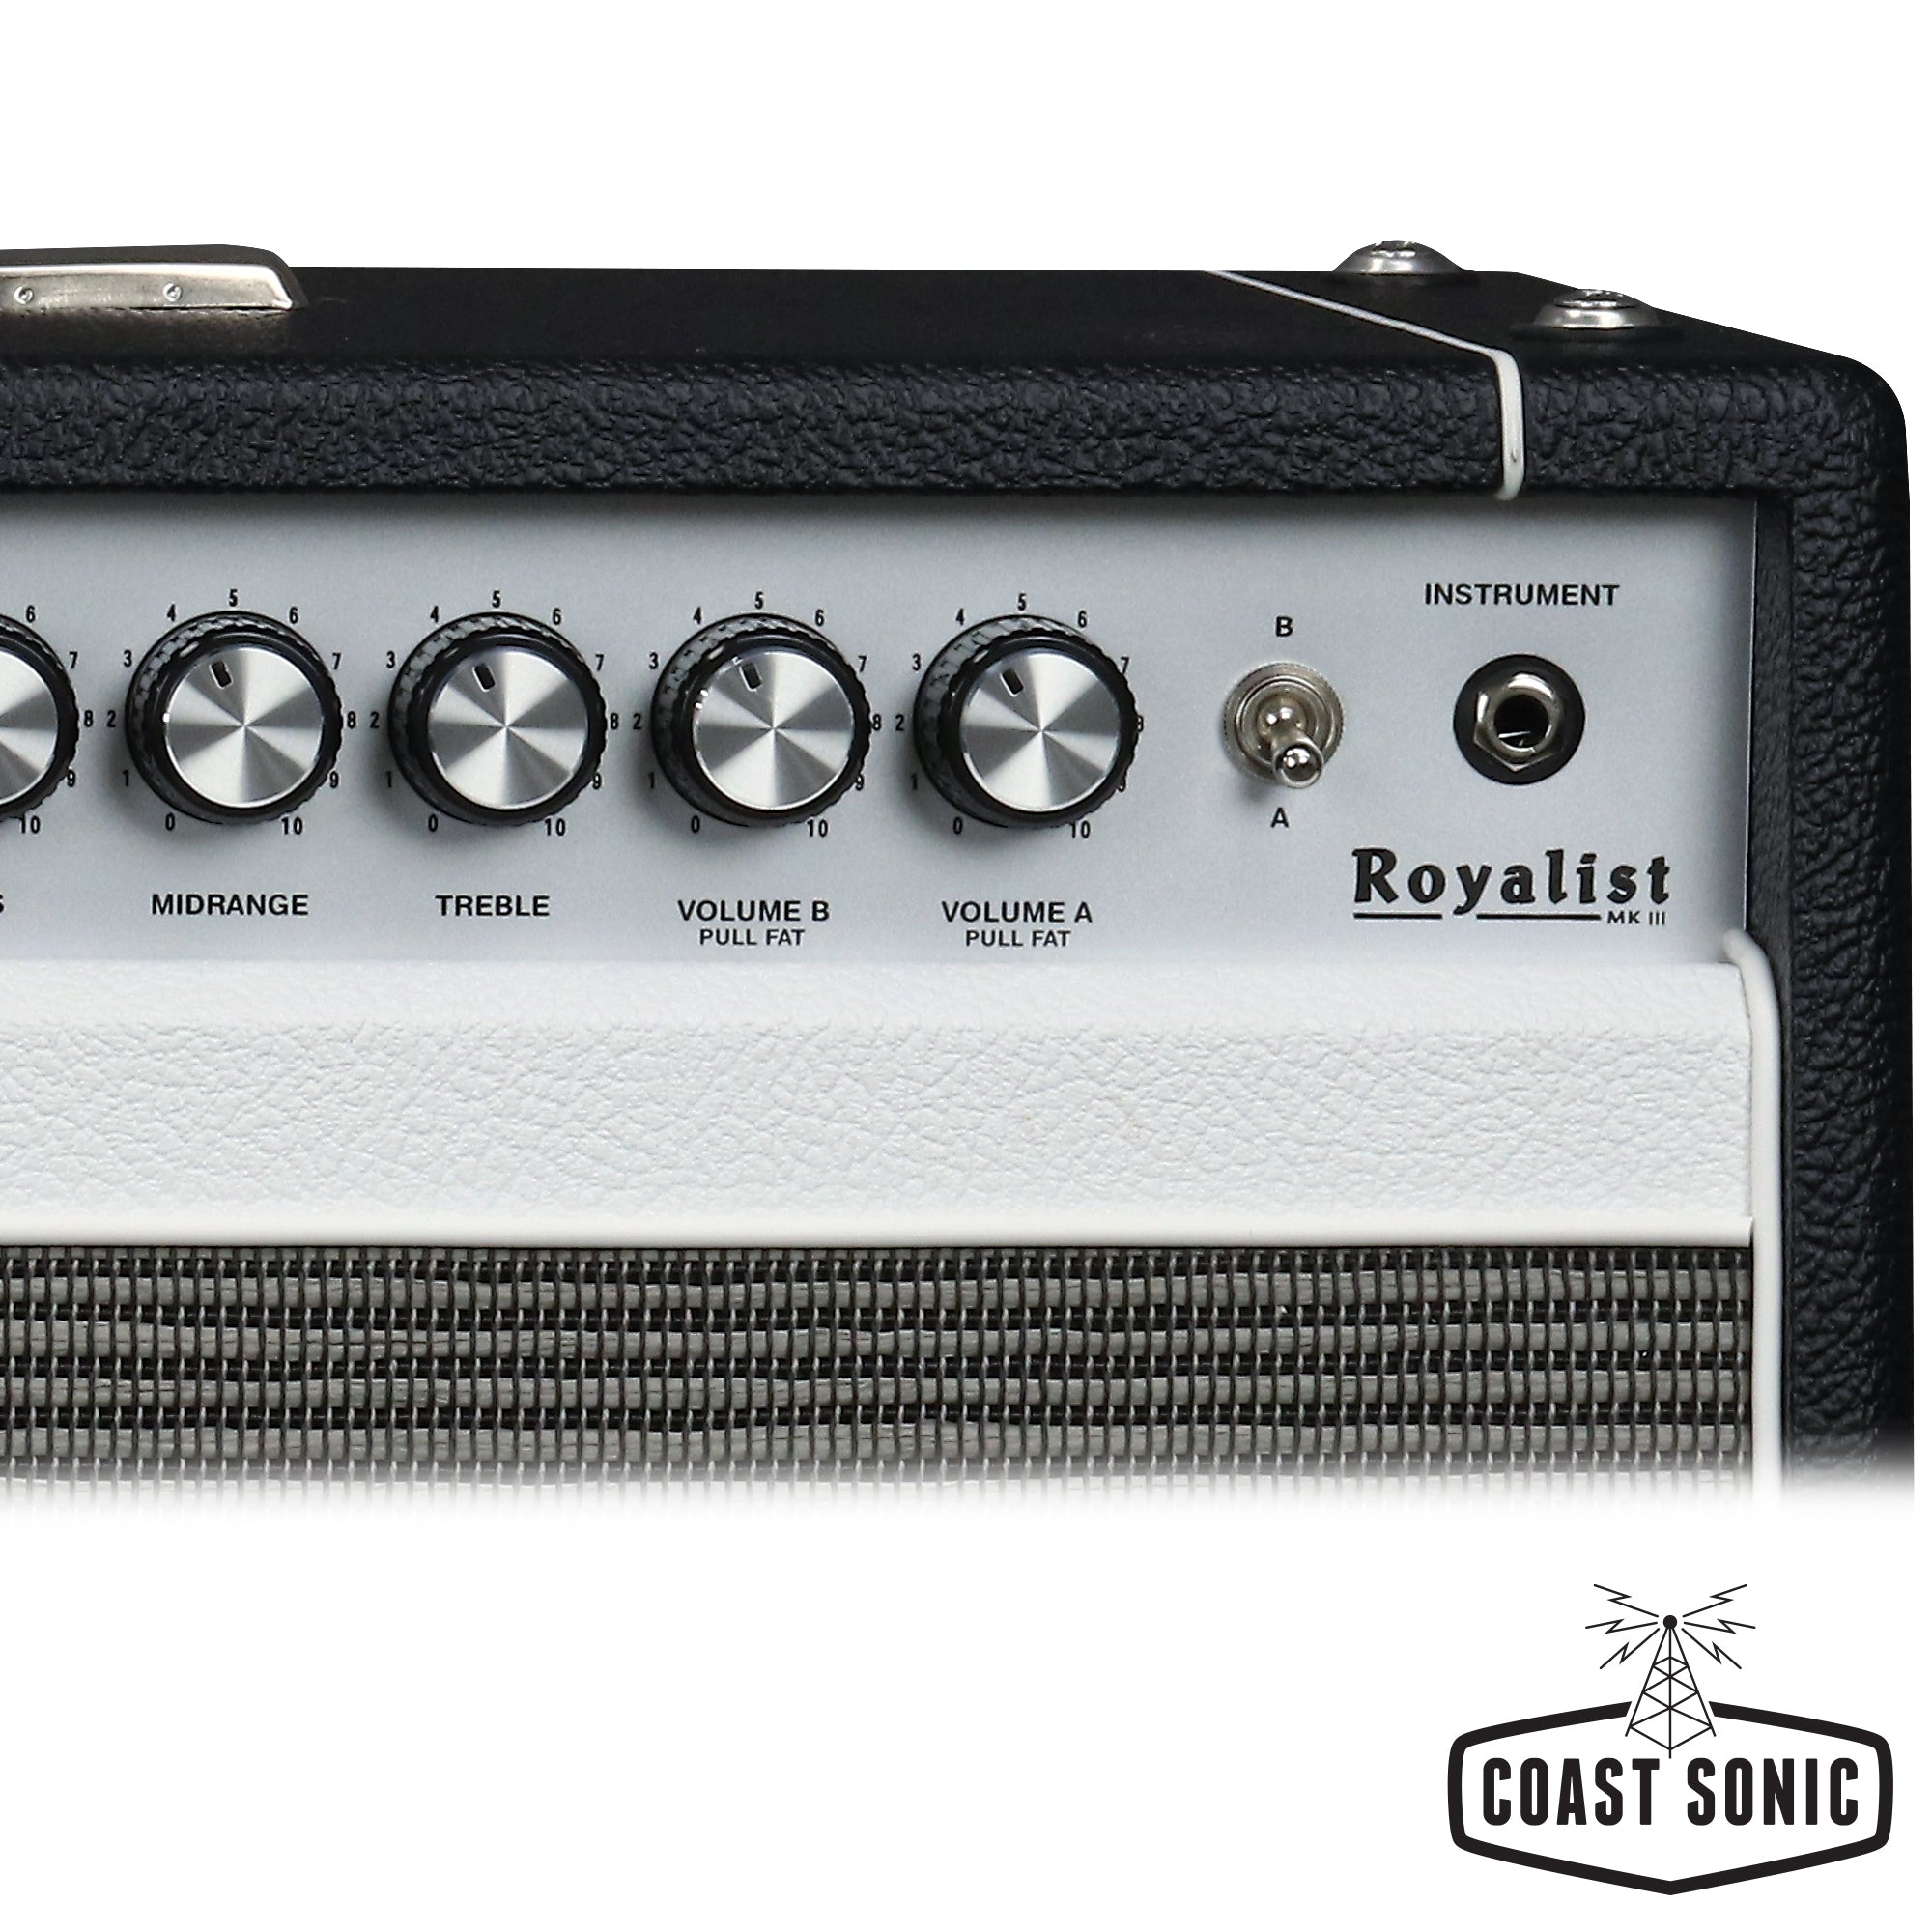 Tone King Royalist MKIII 40W 1x12 combo amplifier